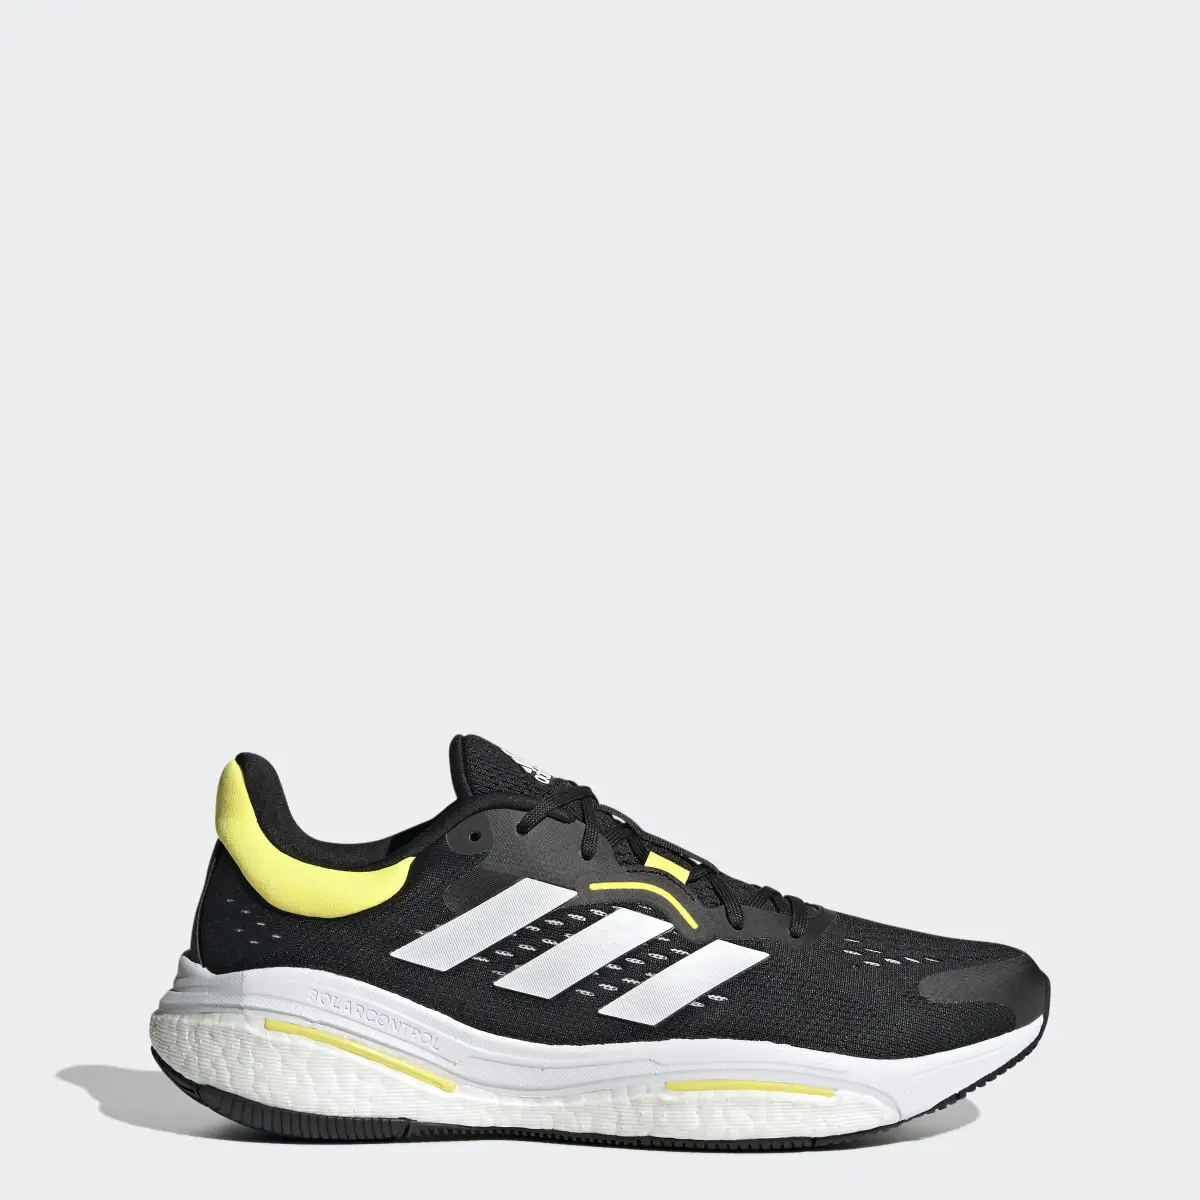 Adidas Solarcontrol Shoes. 1